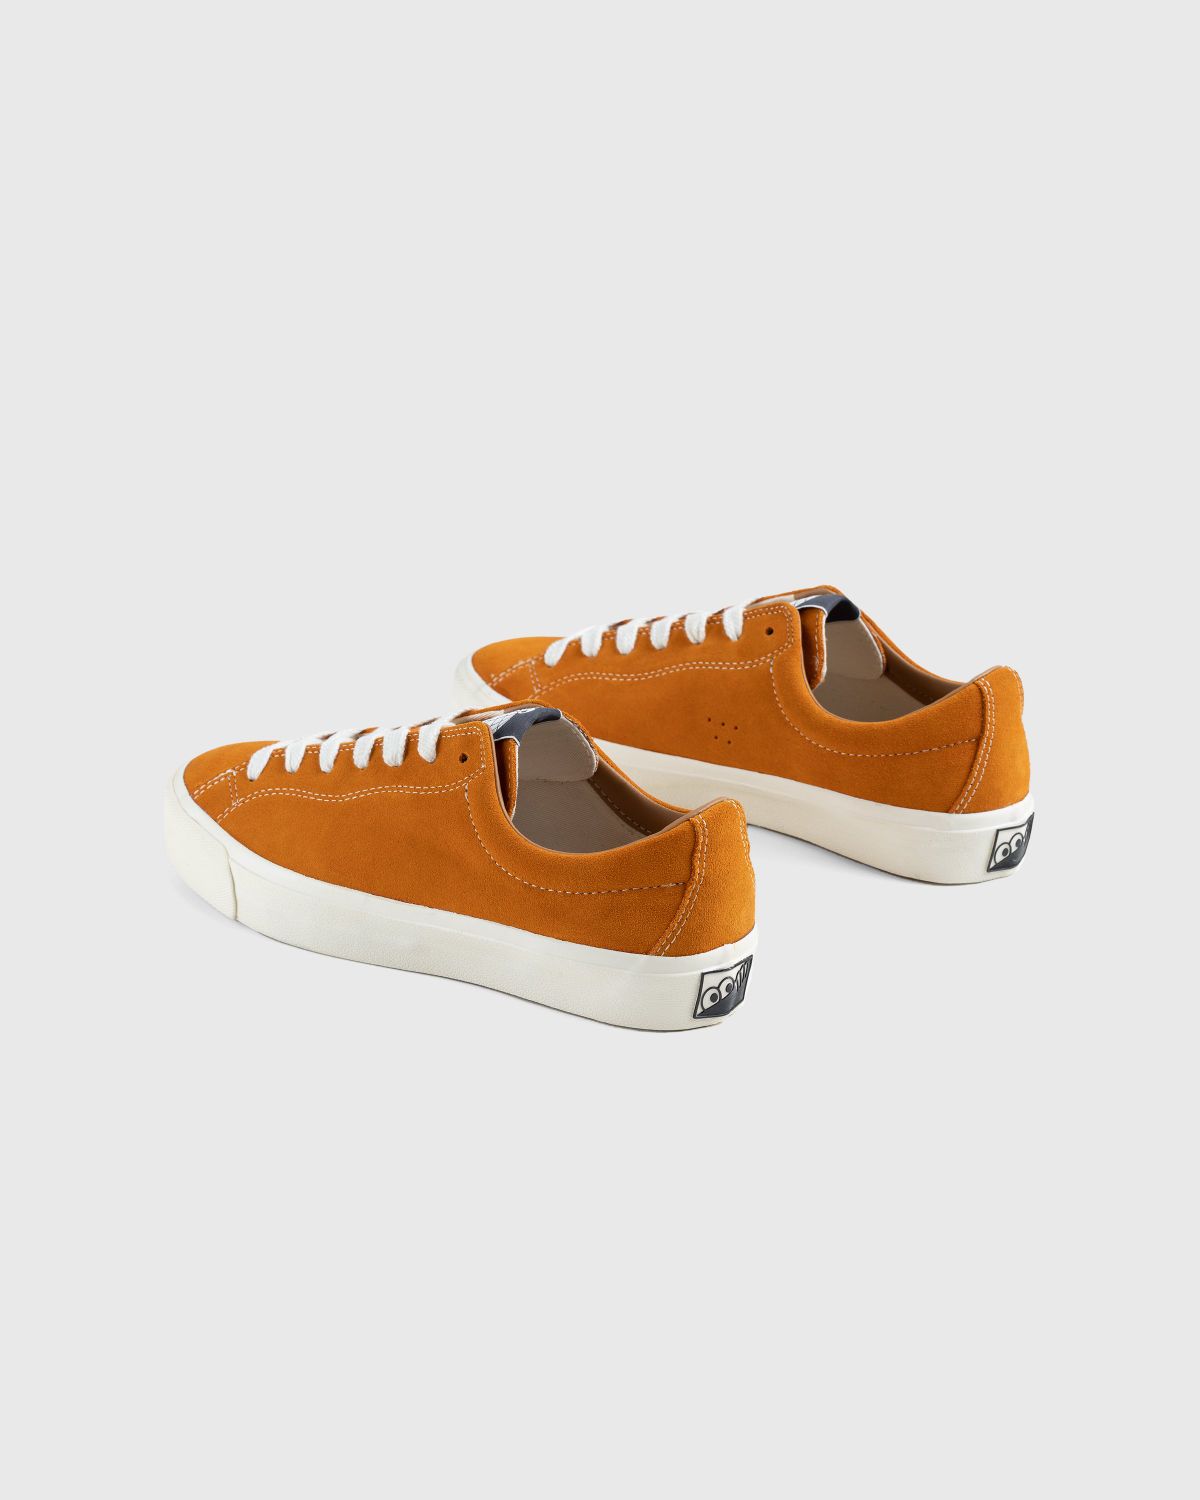 Last Resort AB – VM003 Suede Lo Cheddar/White - Low Top Sneakers - Orange - Image 3